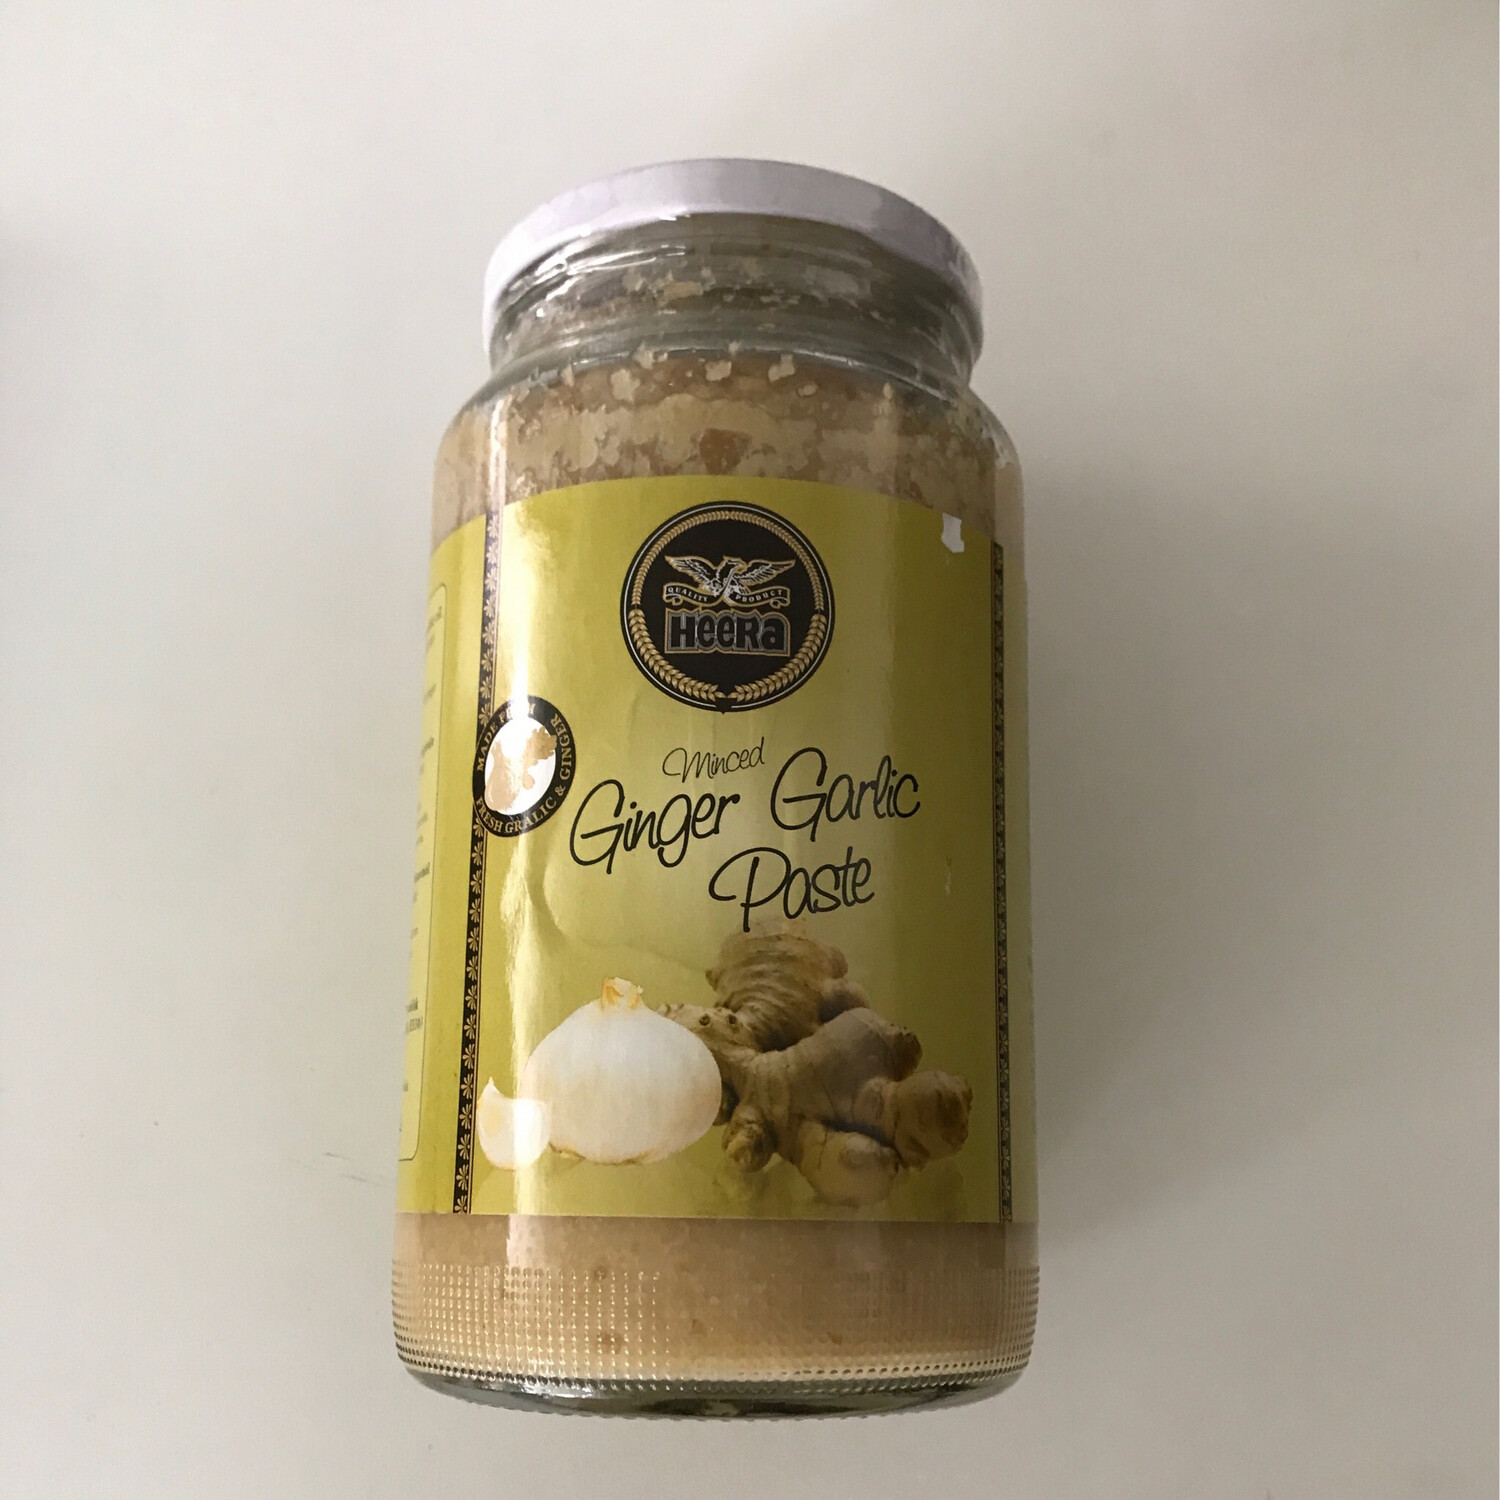 Heera Minced Ginger Garlic Paste (Gehackte Ingwer-Knoblauch-Paste) 1kg